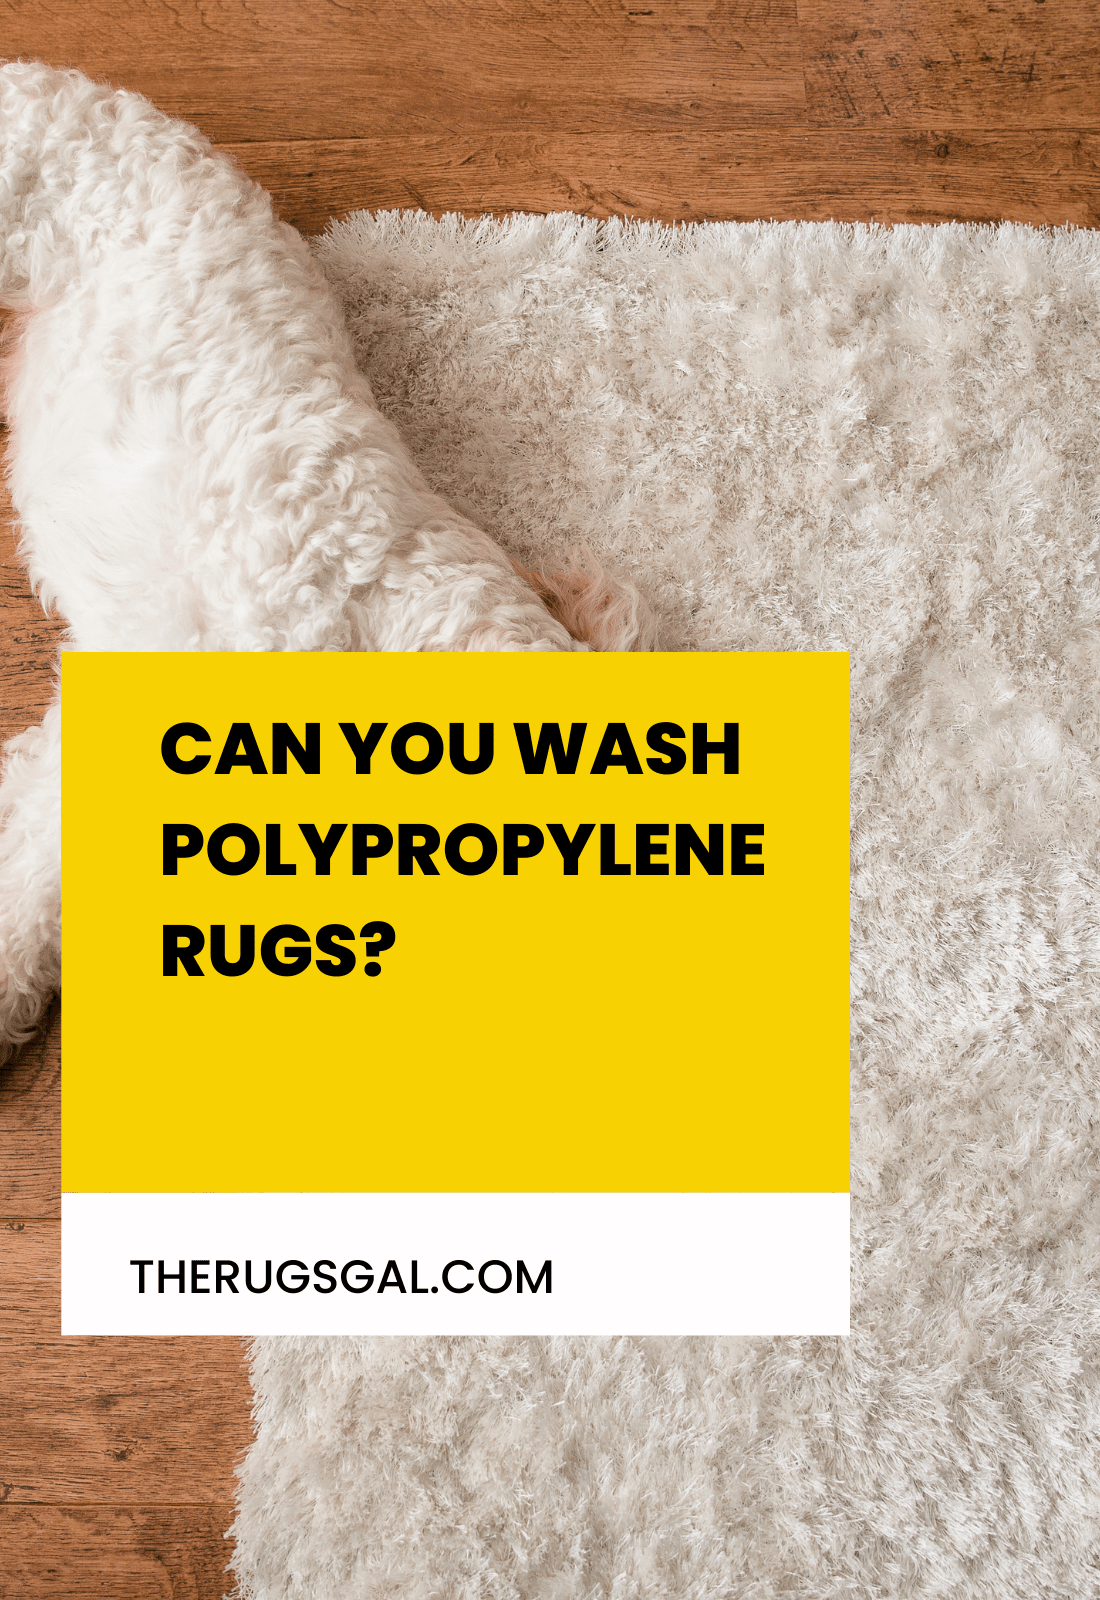 Can you wash polypropylene rugs?